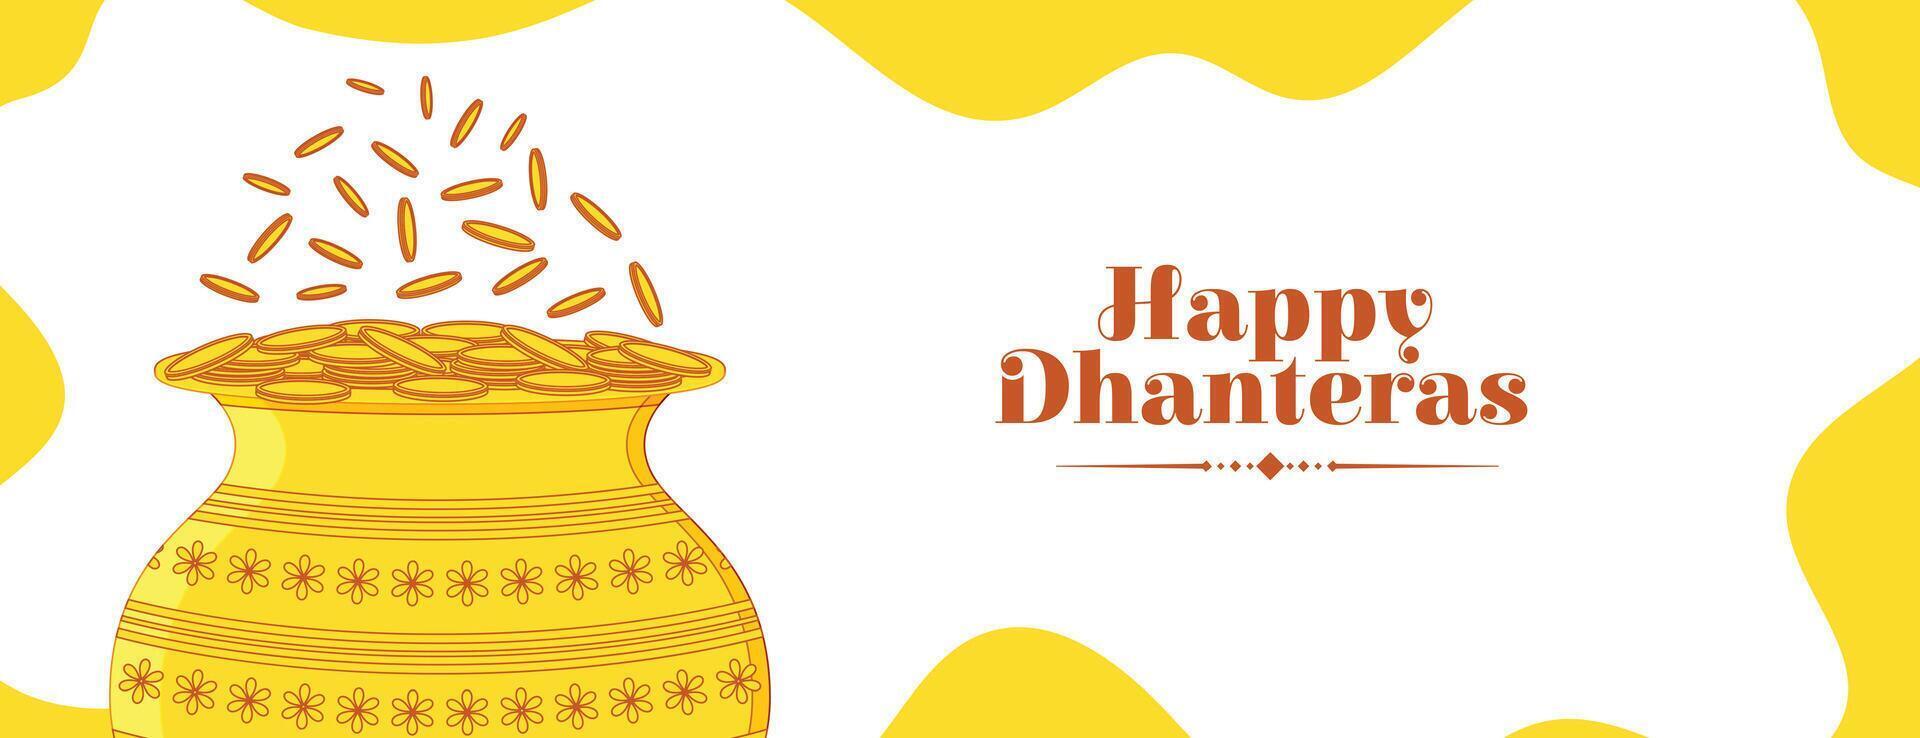 happy dhanteras festive wallpaper with pot and golden coin design vector